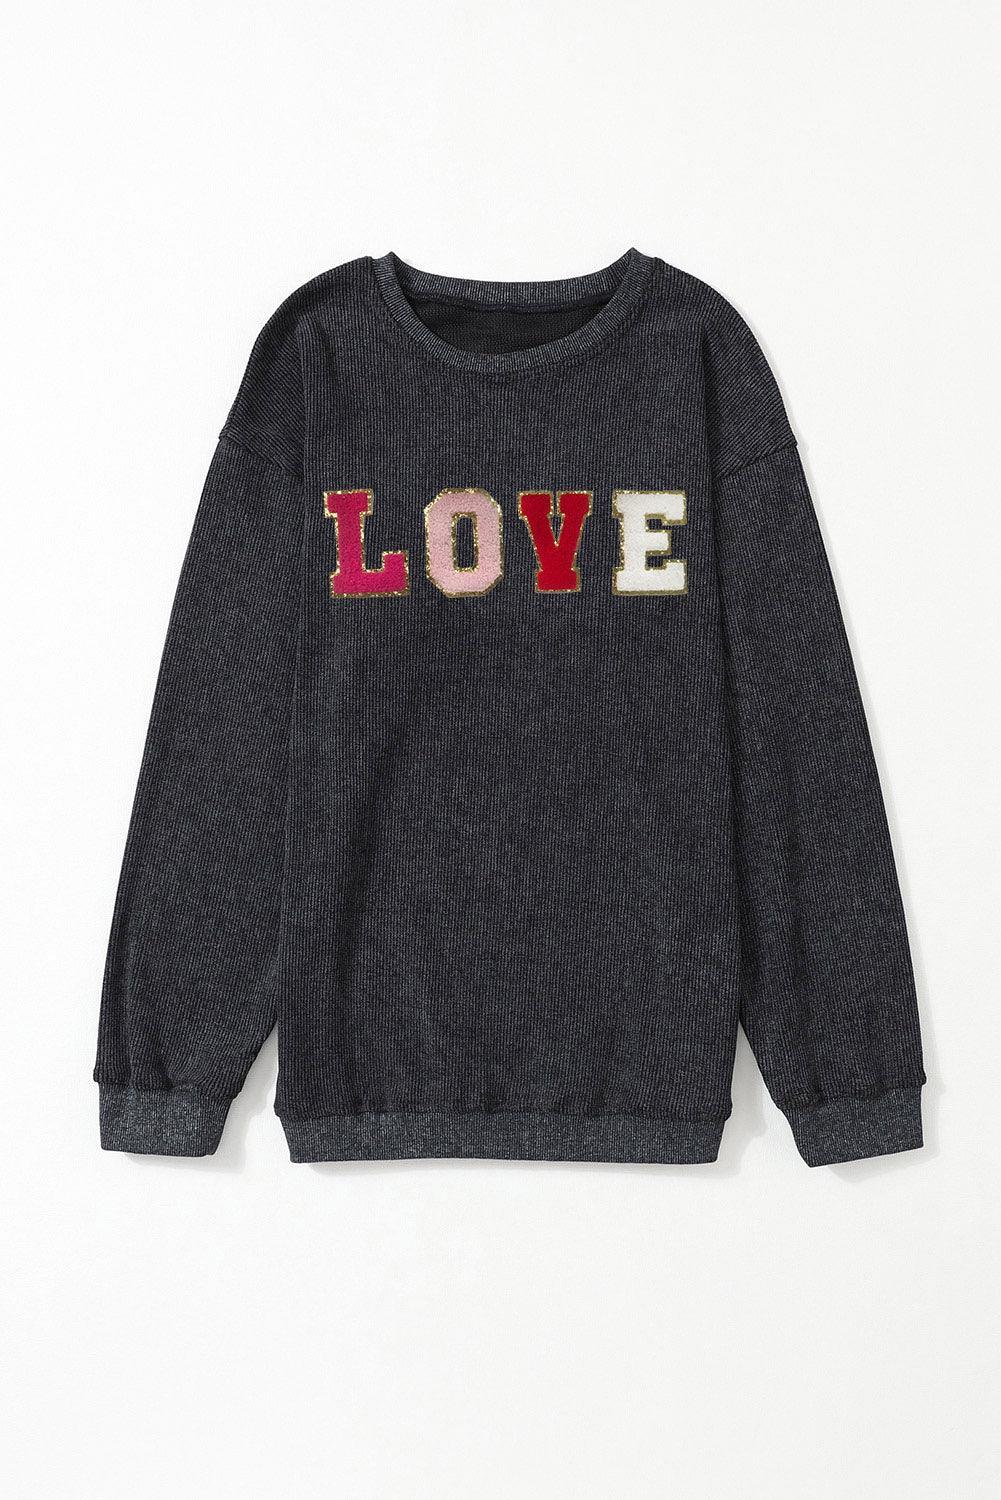 Black Glitter LOVE Letter Graphic Corded Baggy Sweatshirt